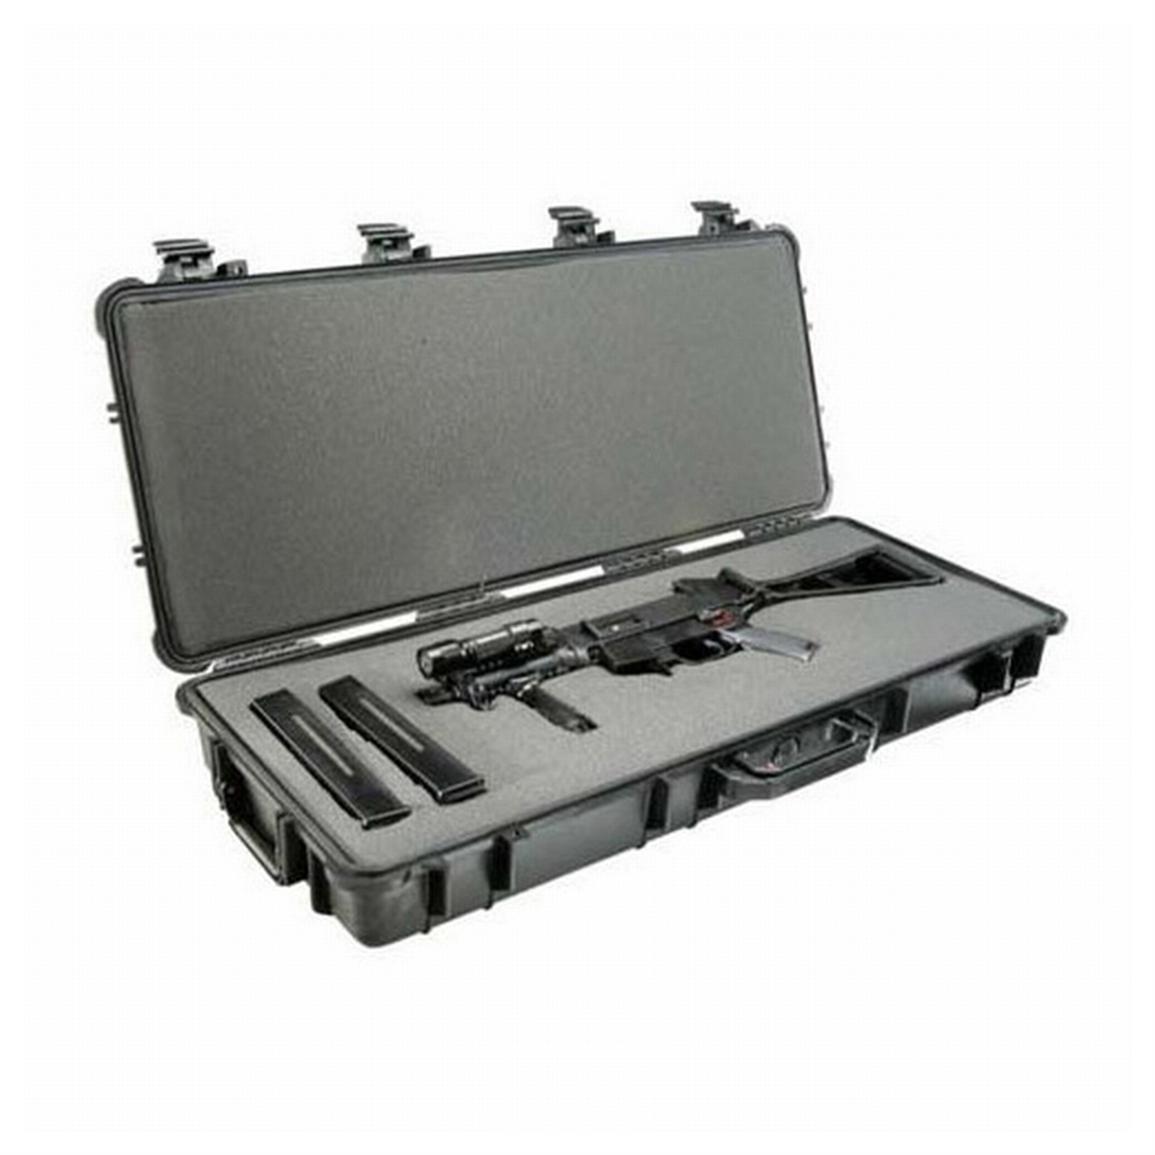 Pelican™ 1700 Gun Case - 581376, Gun Cases at Sportsman's Guide1155 x 1155